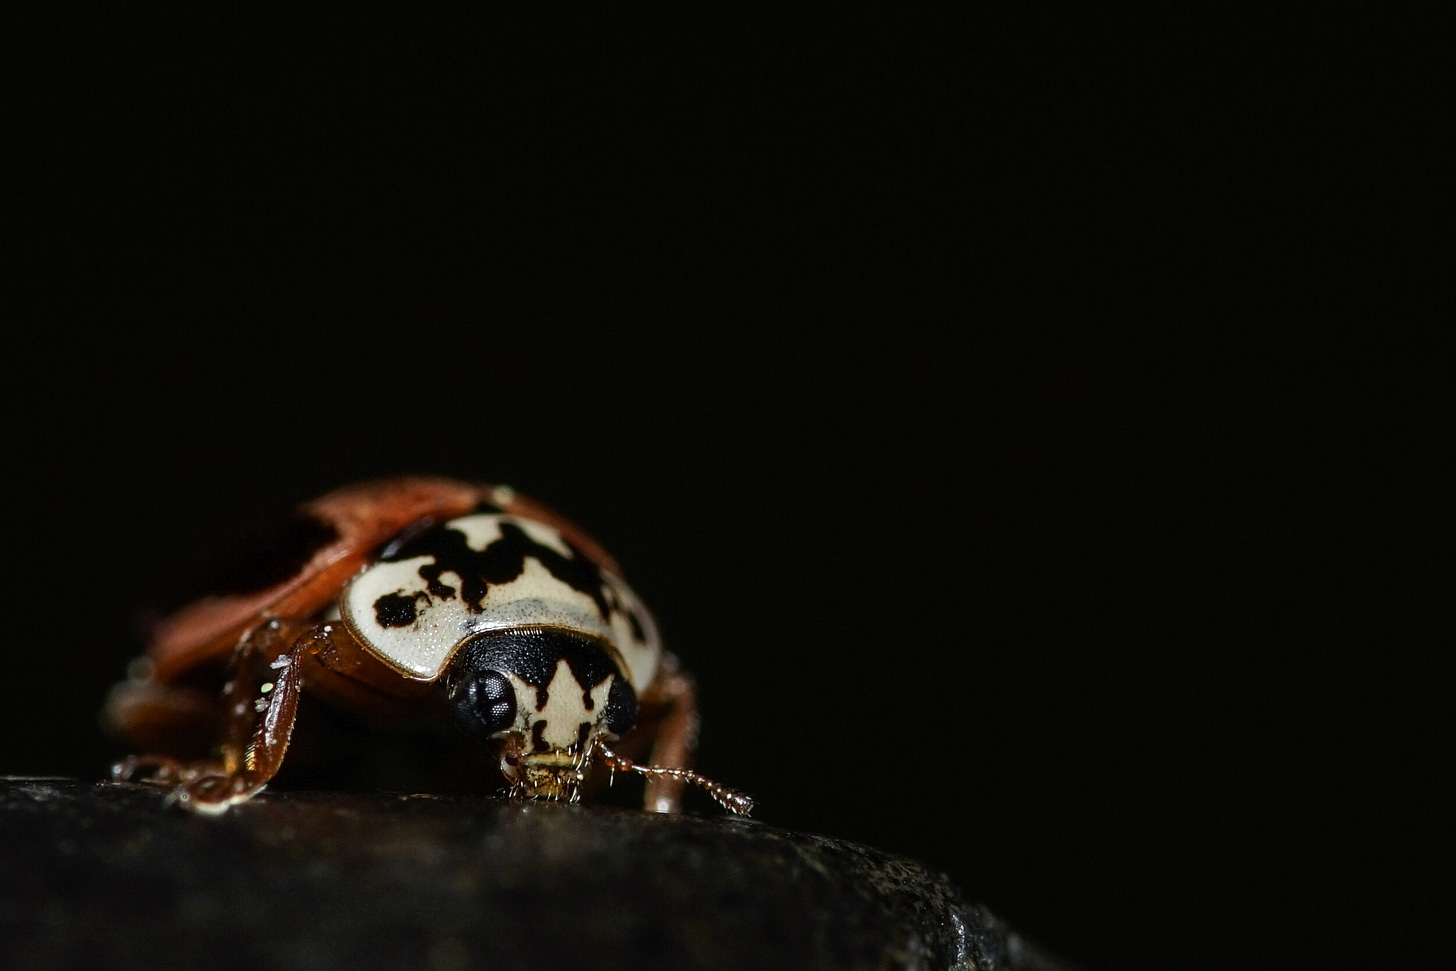 A Painted Lady Beetle, Mulsantina picta